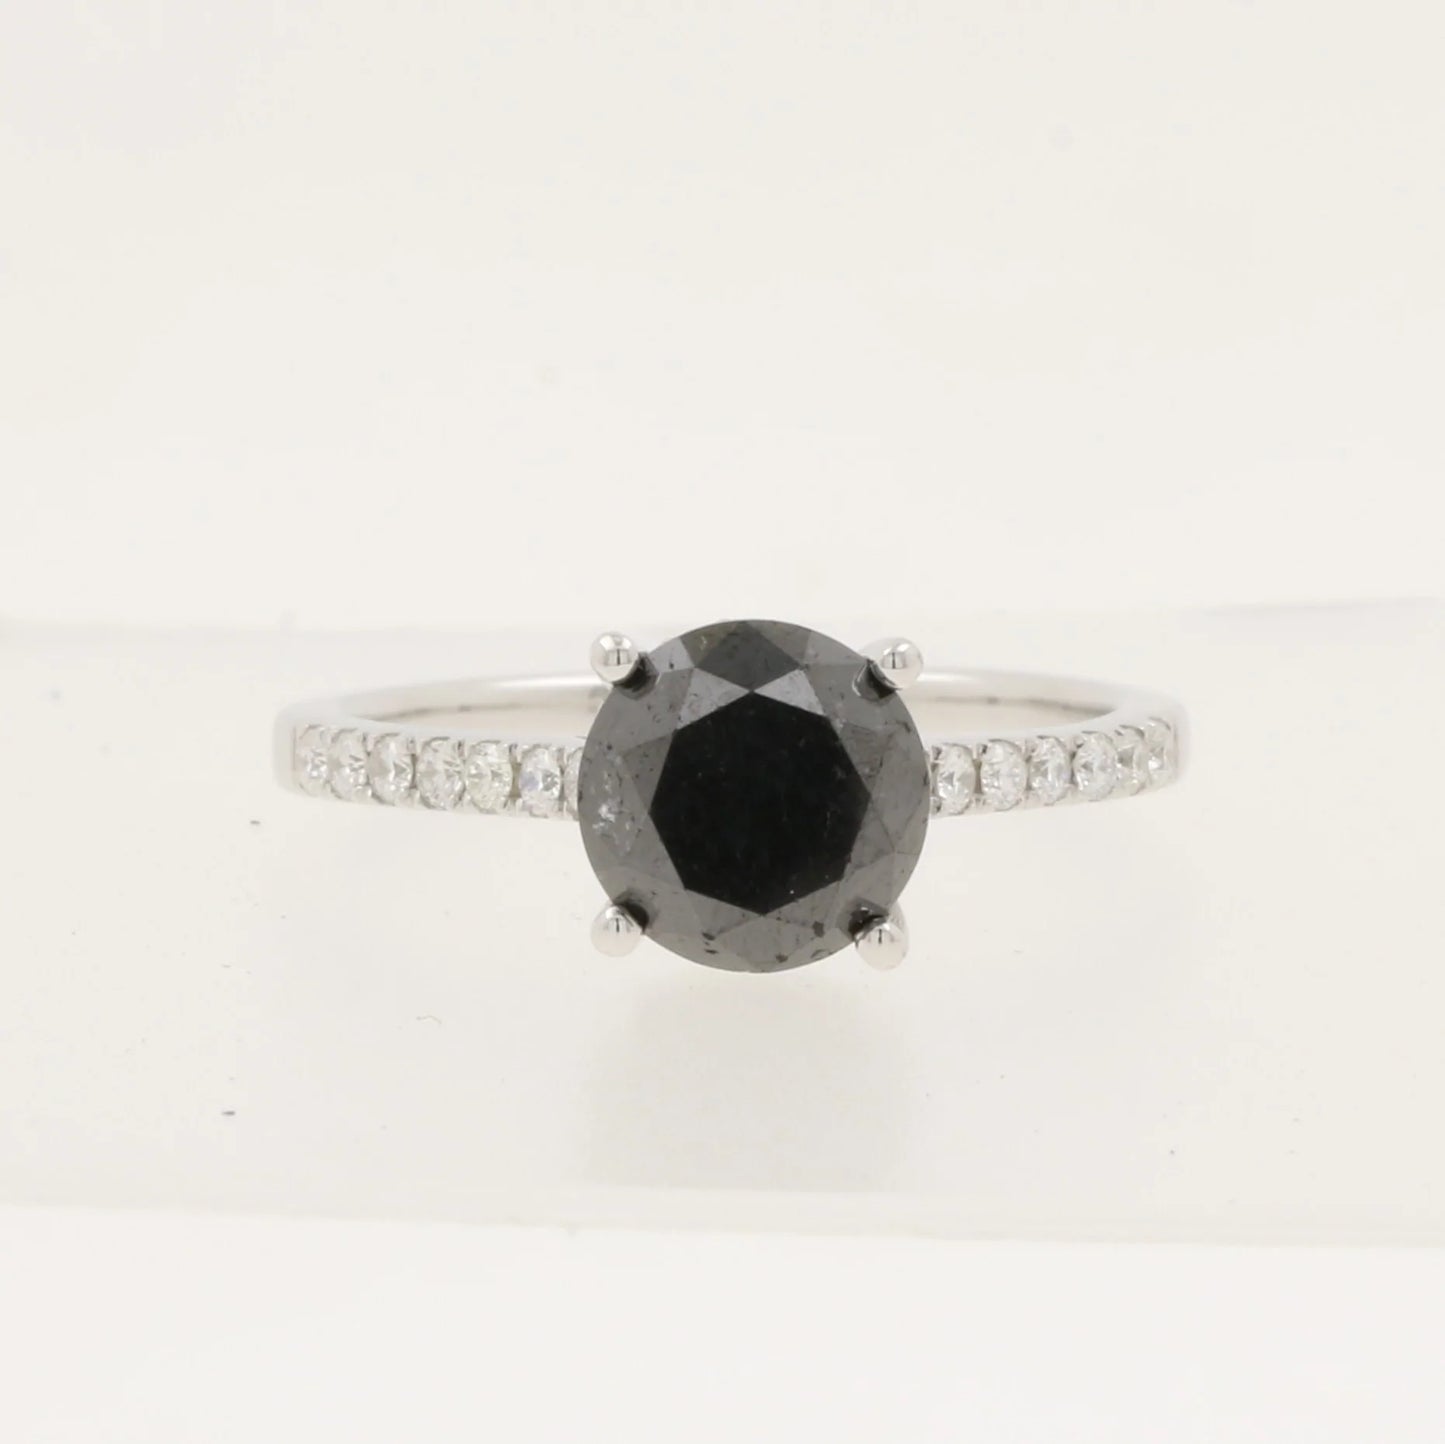 15865R Ring With Diamond